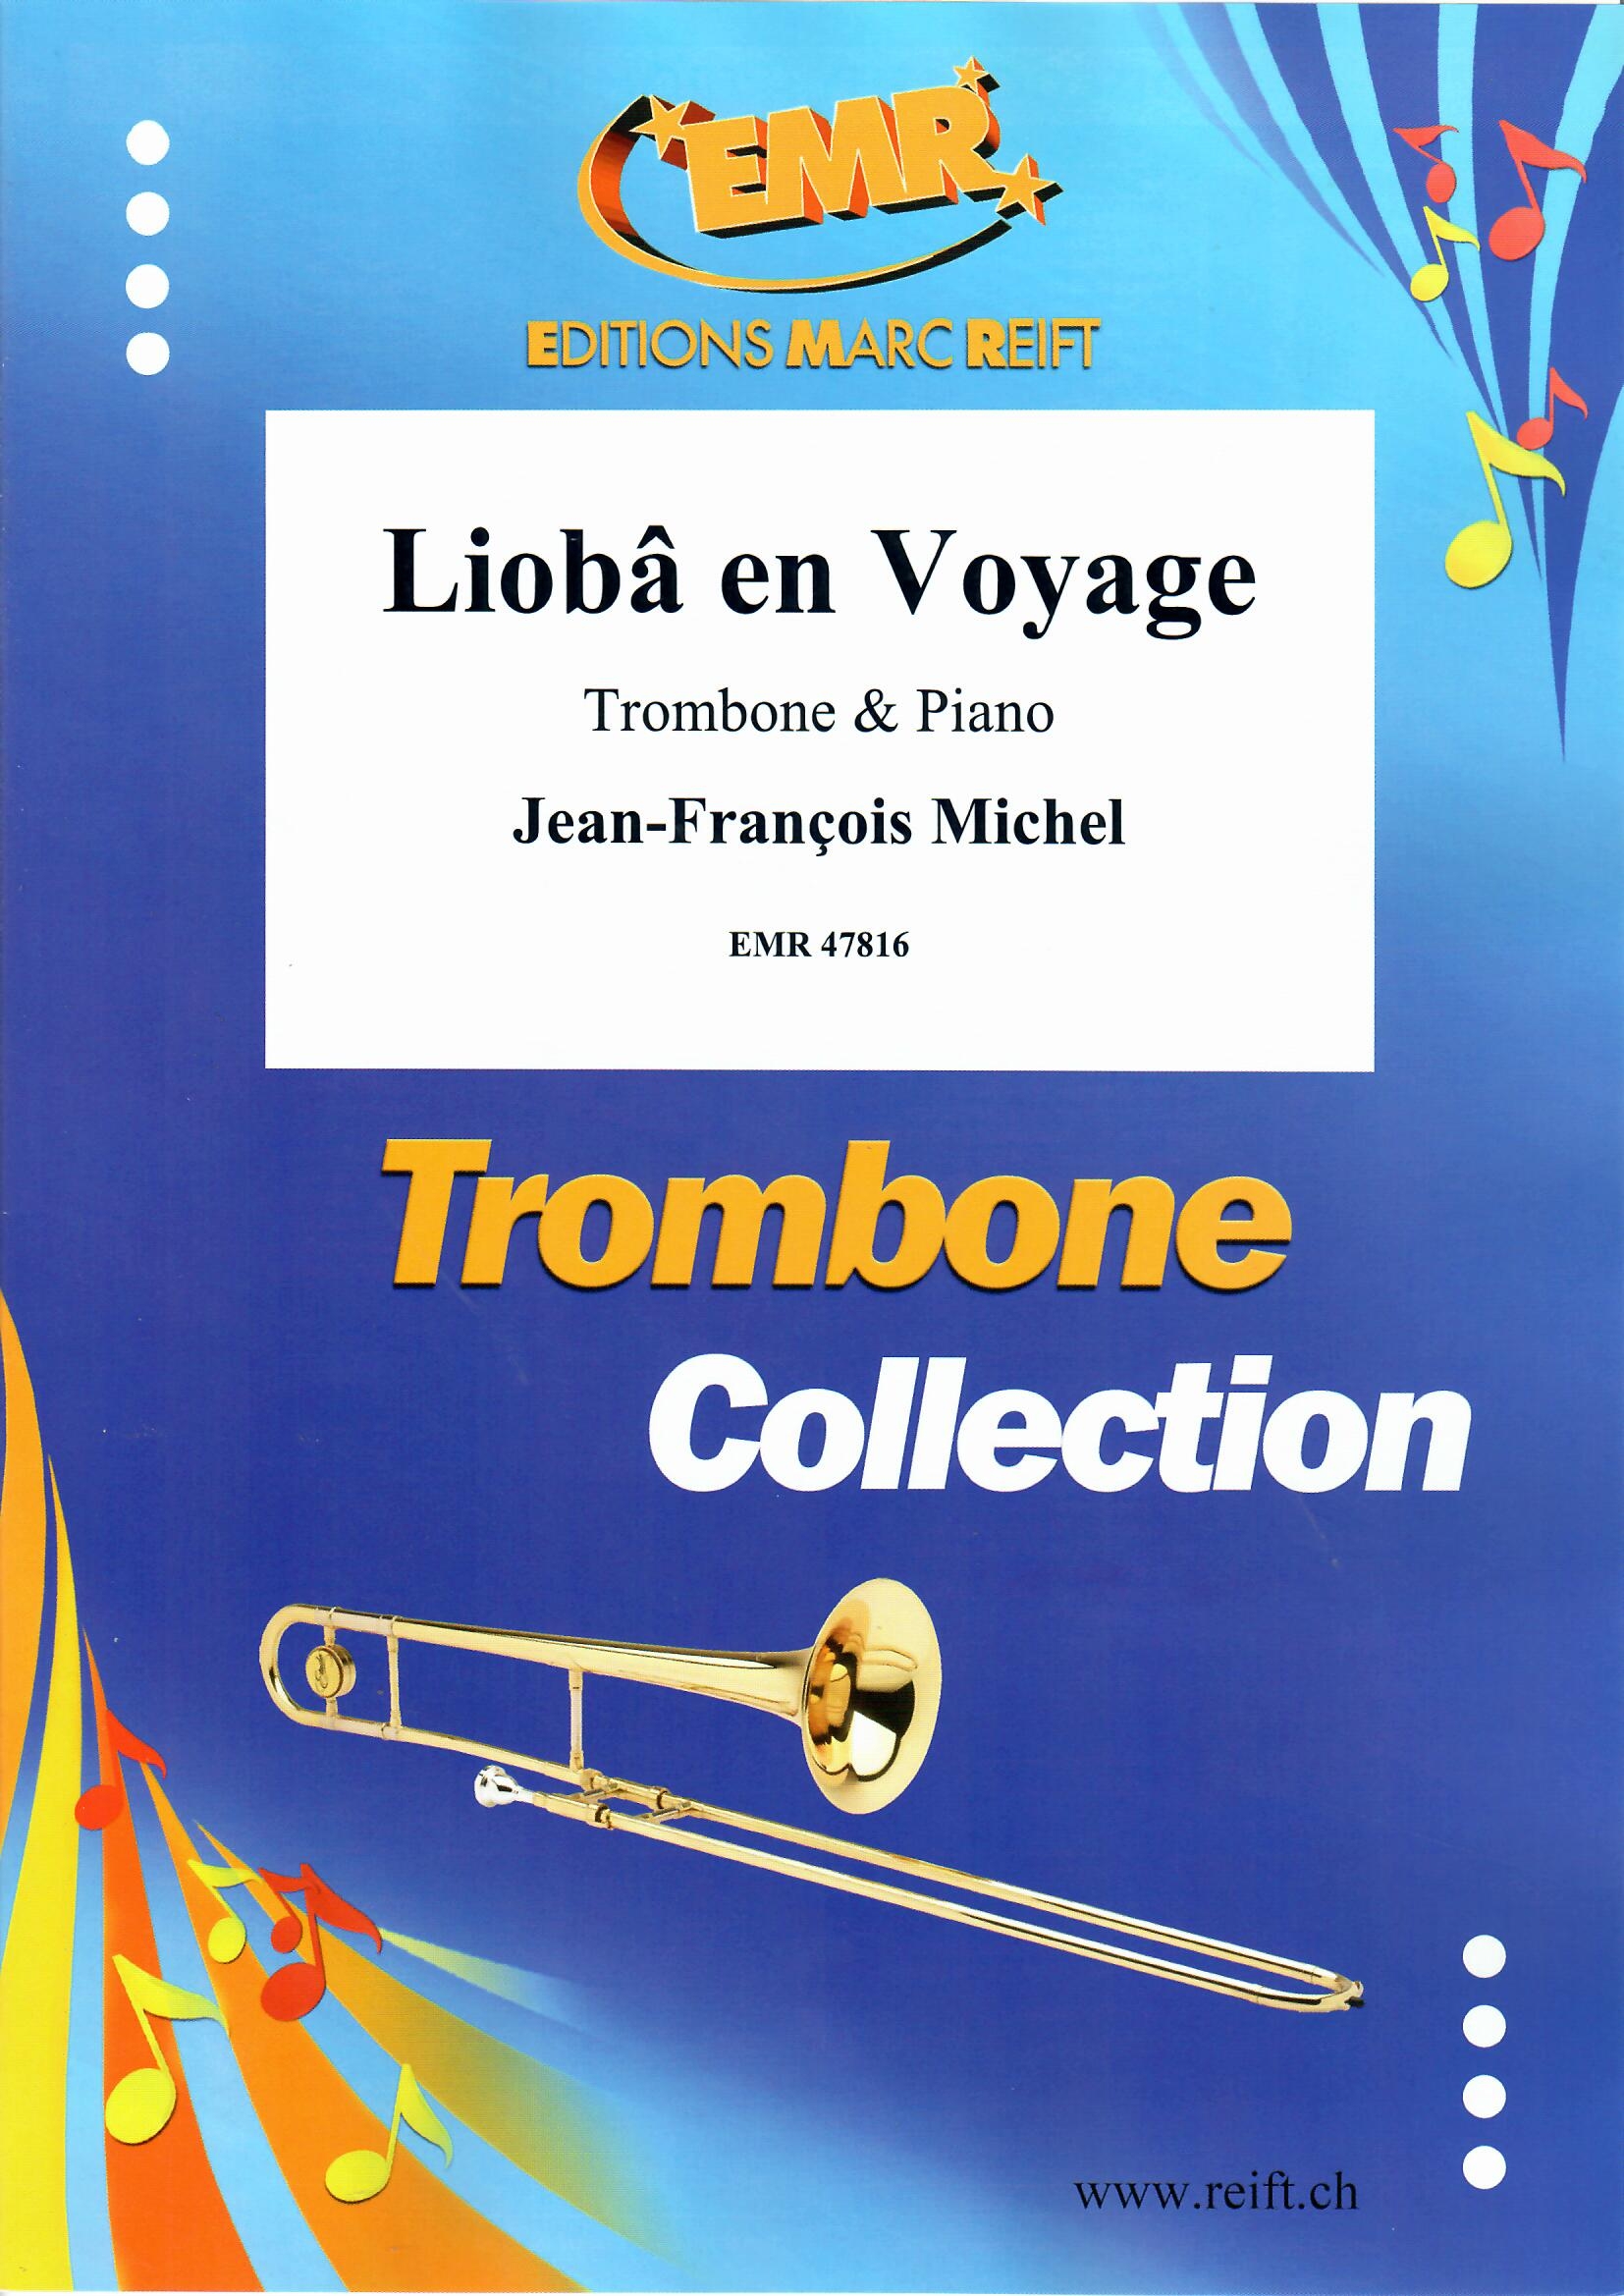 LIOBâ EN VOYAGE - Trombone & Piano